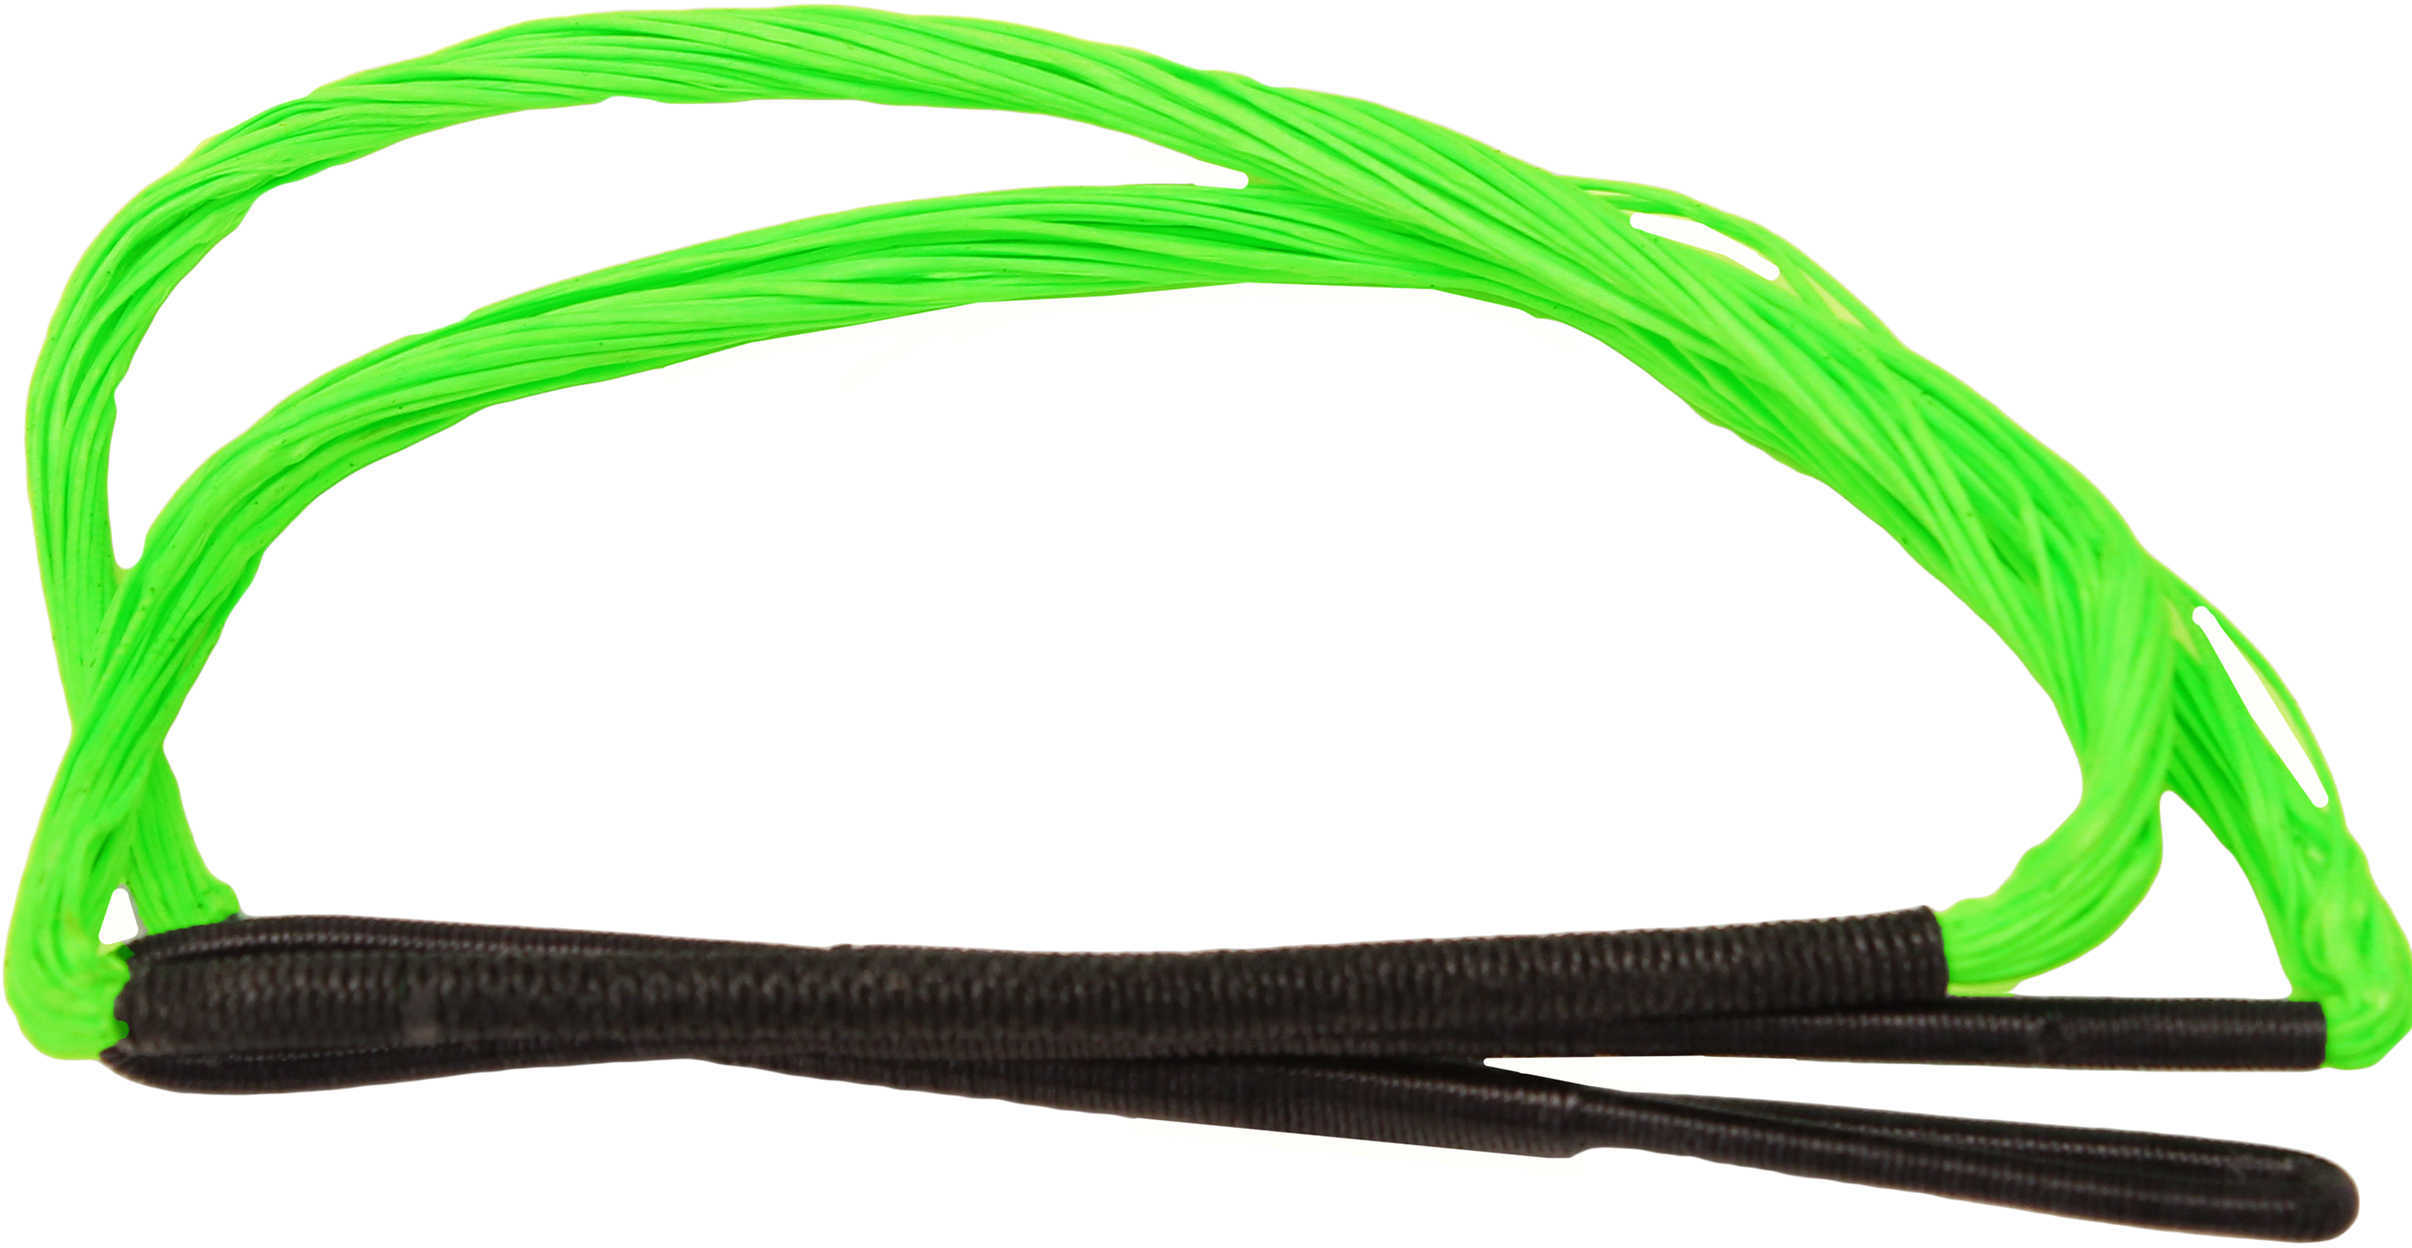 Excalibur Micro String Green Model: 1993ZG